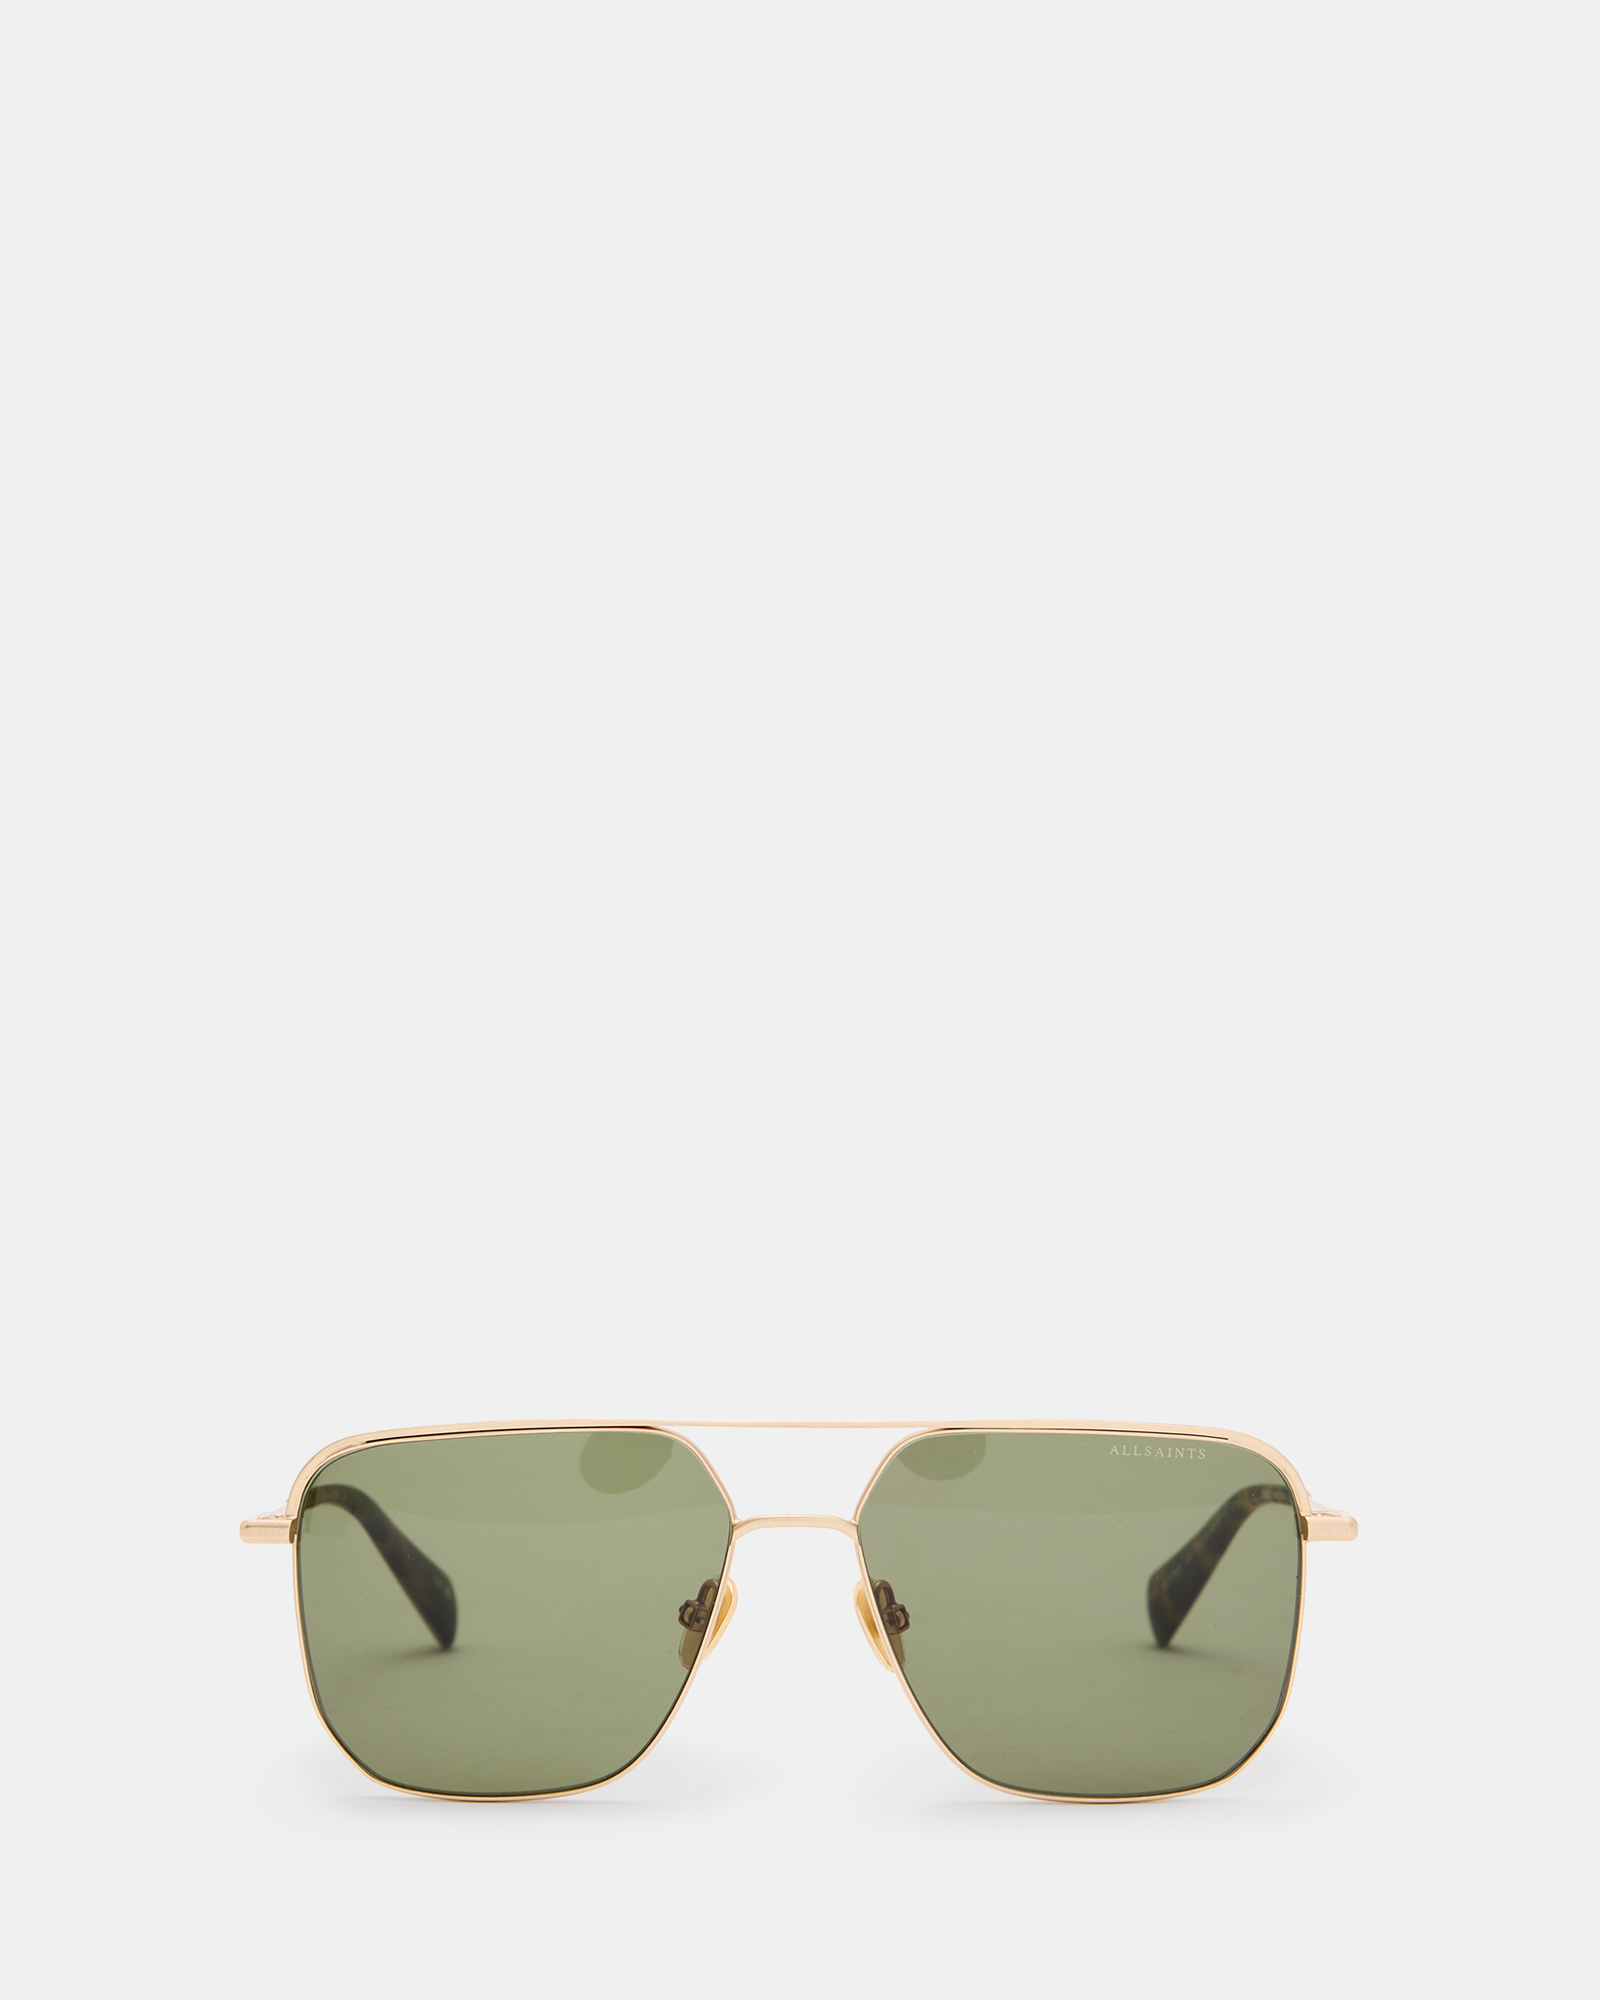 AllSaints Swift Square Aviator Sunglasses